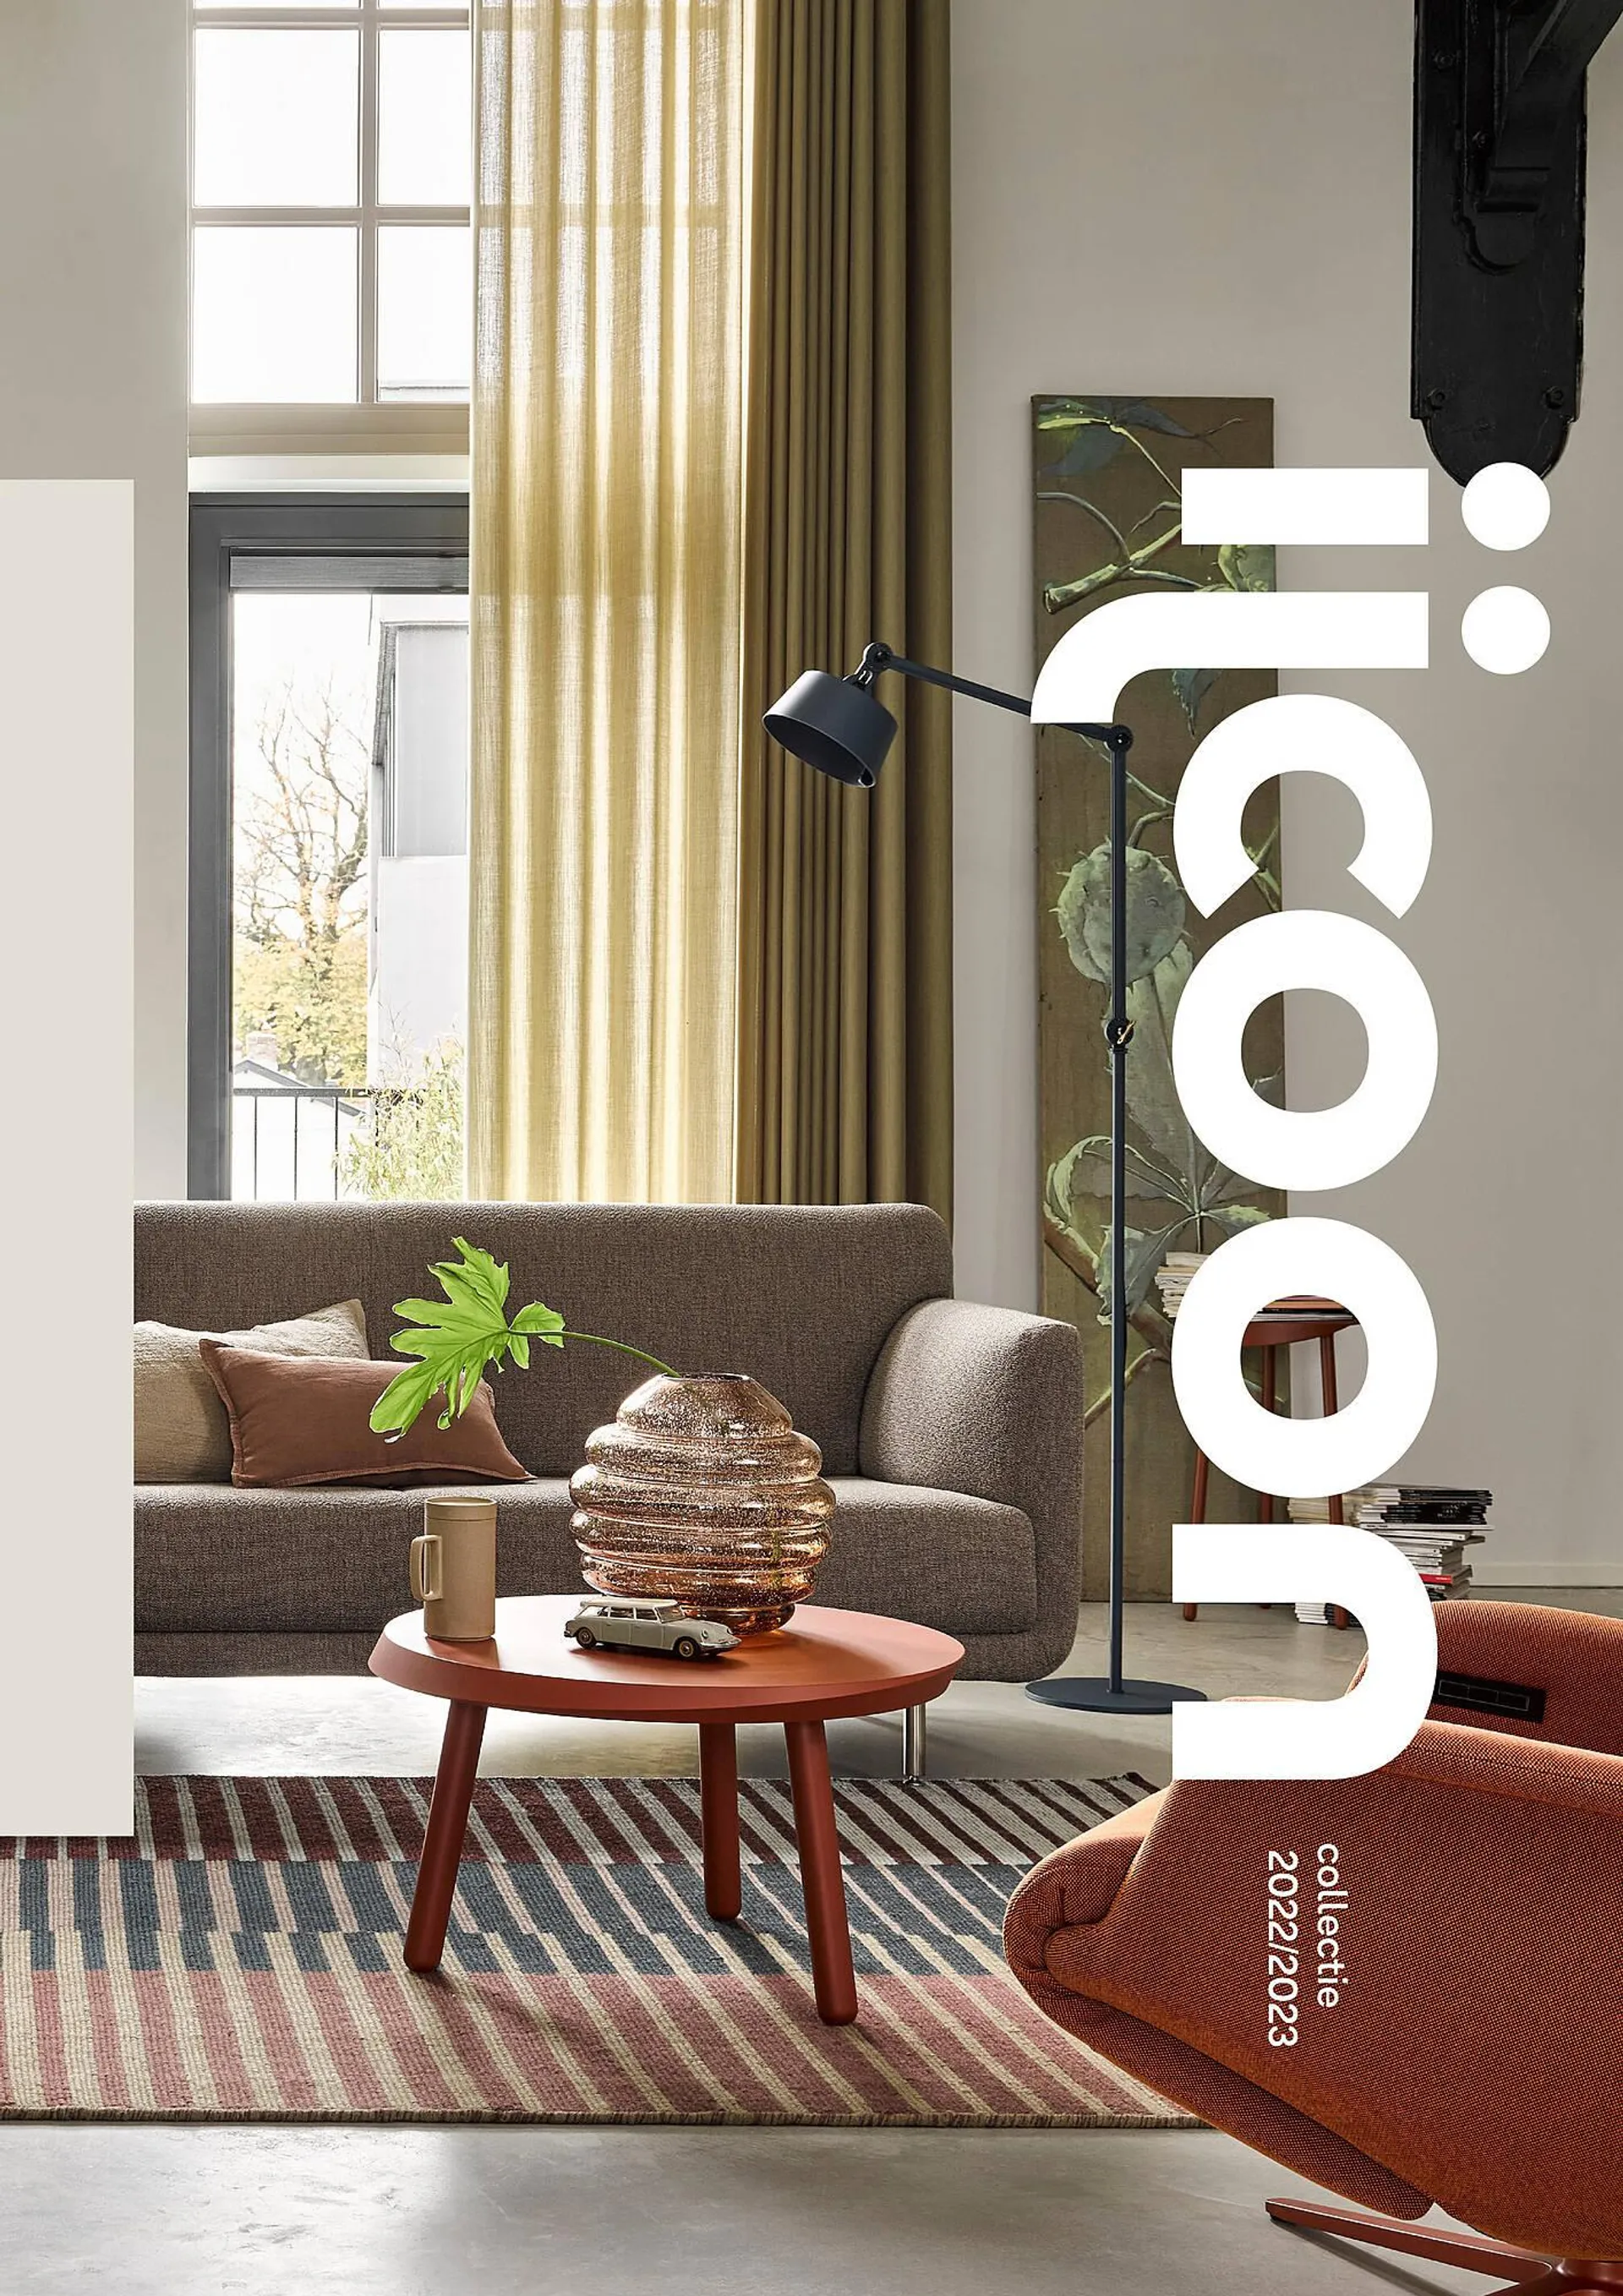 Xooon magazine - 1